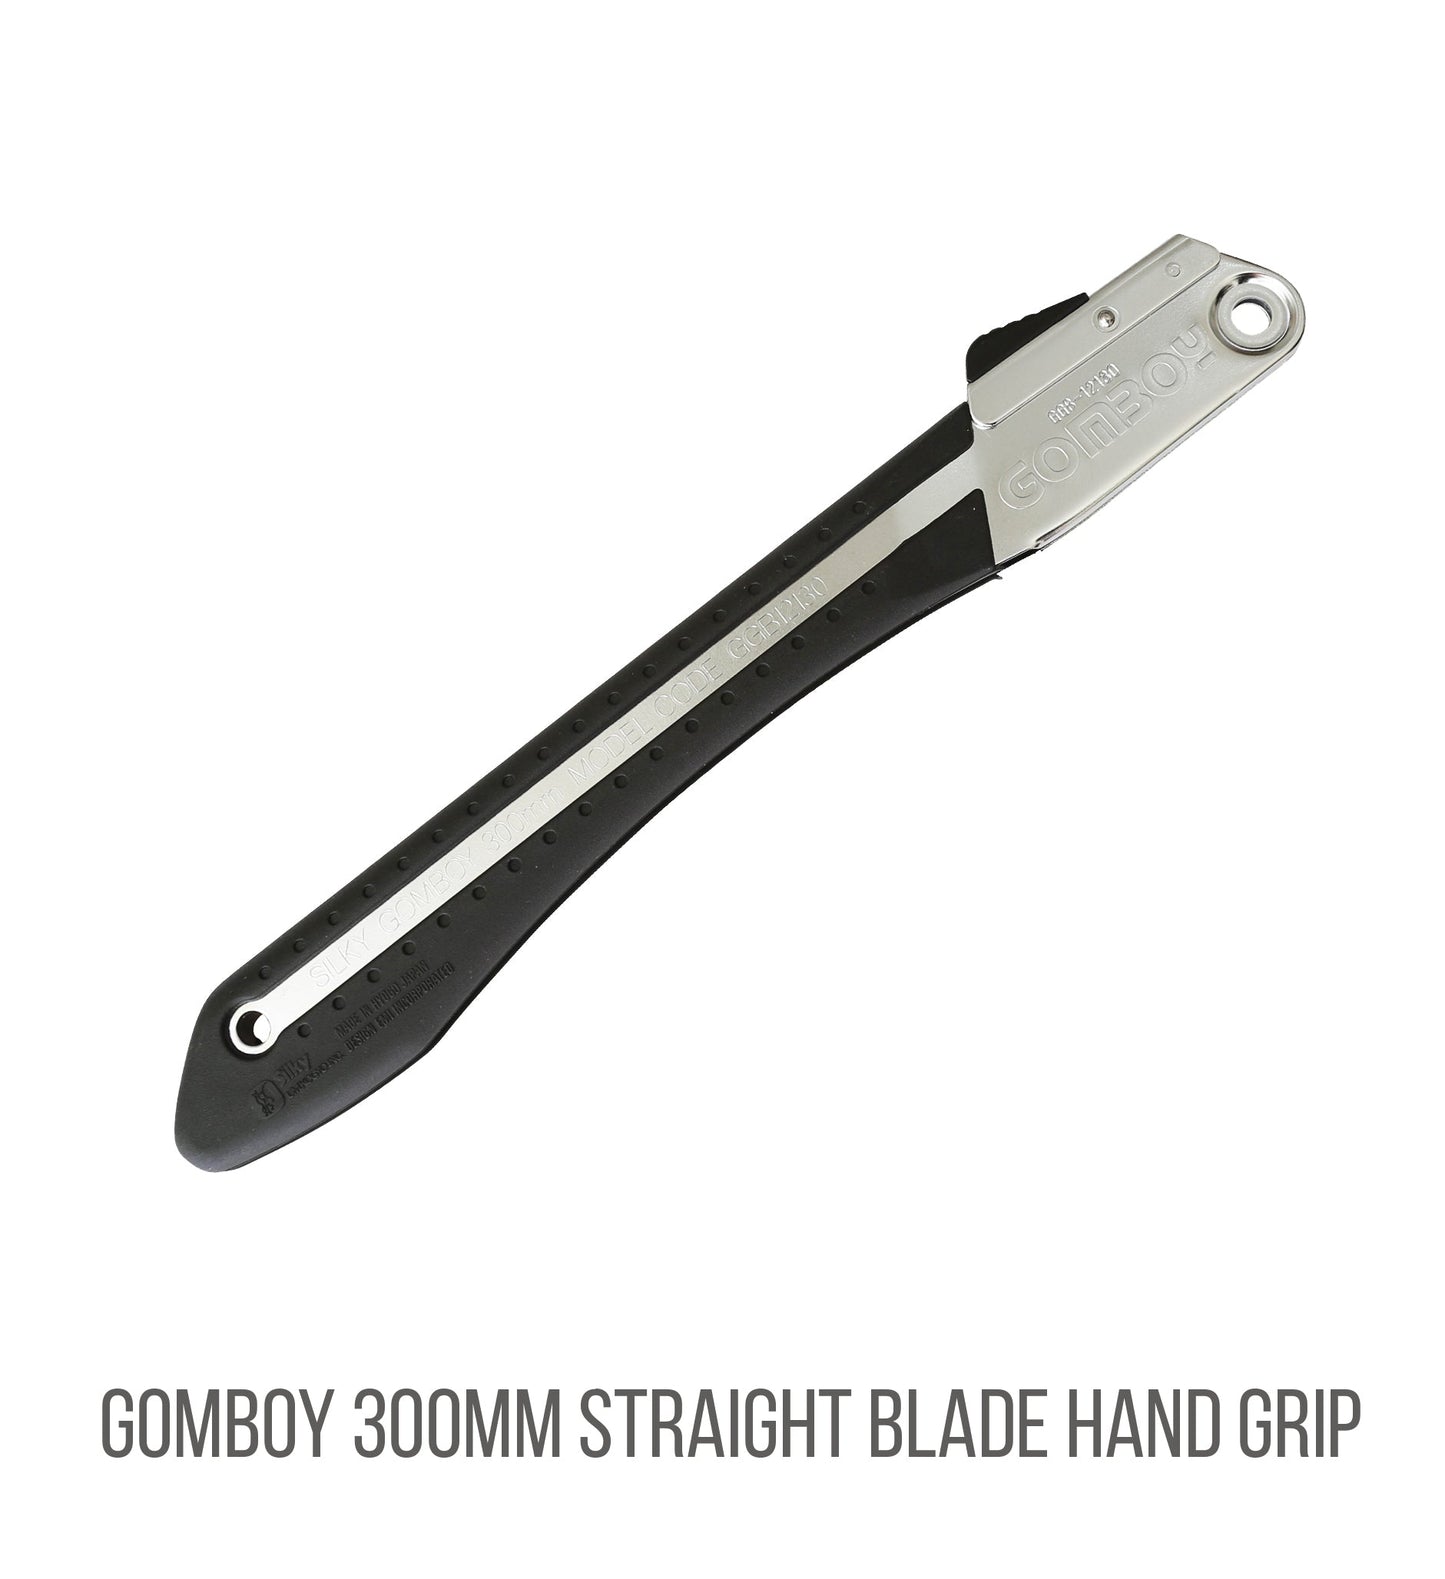 HAND GRIPS - Gomboy